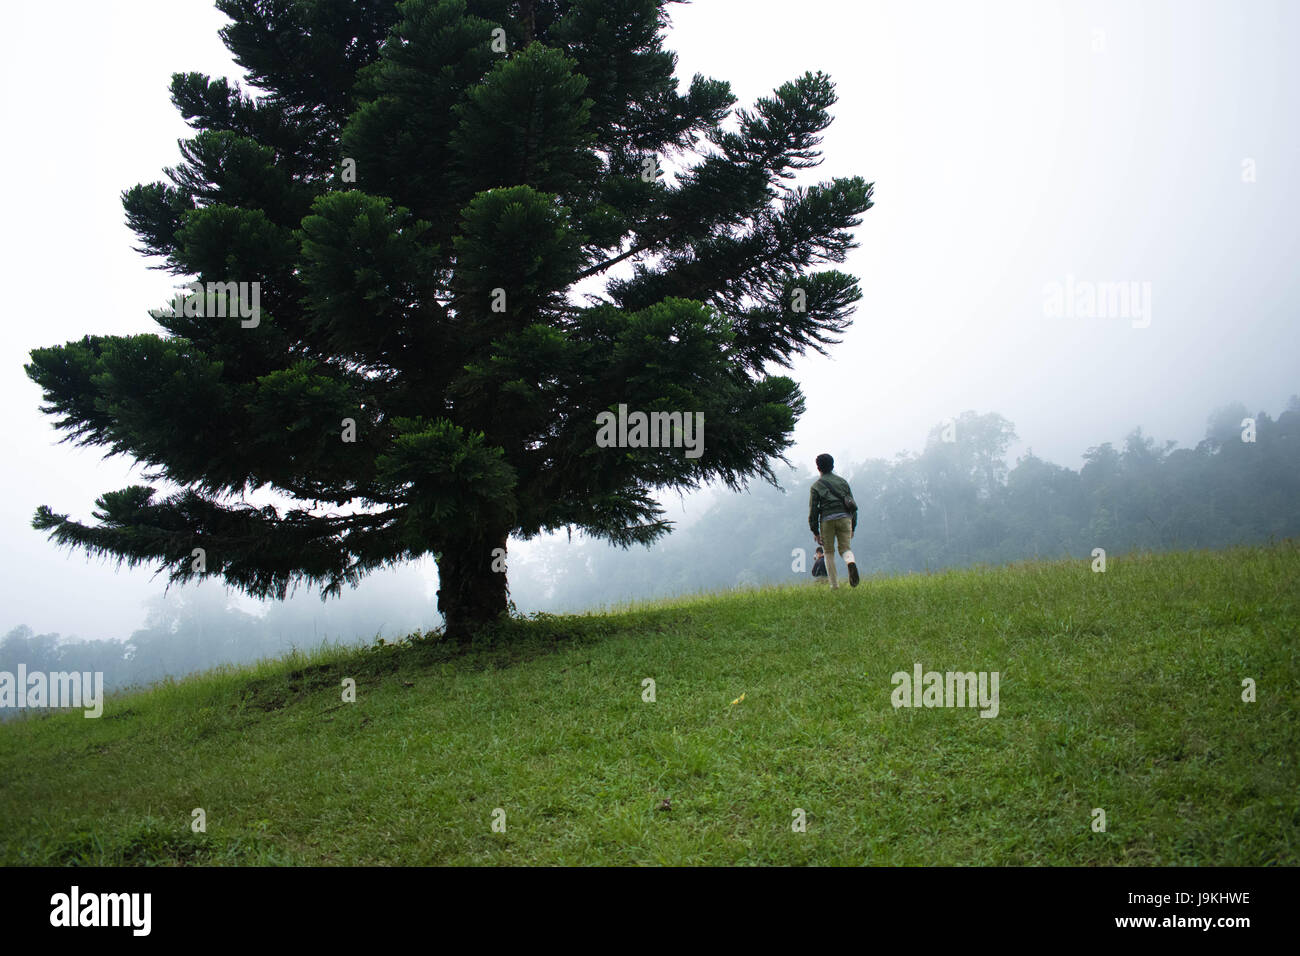 Man walking under a pine tree Stock Photo